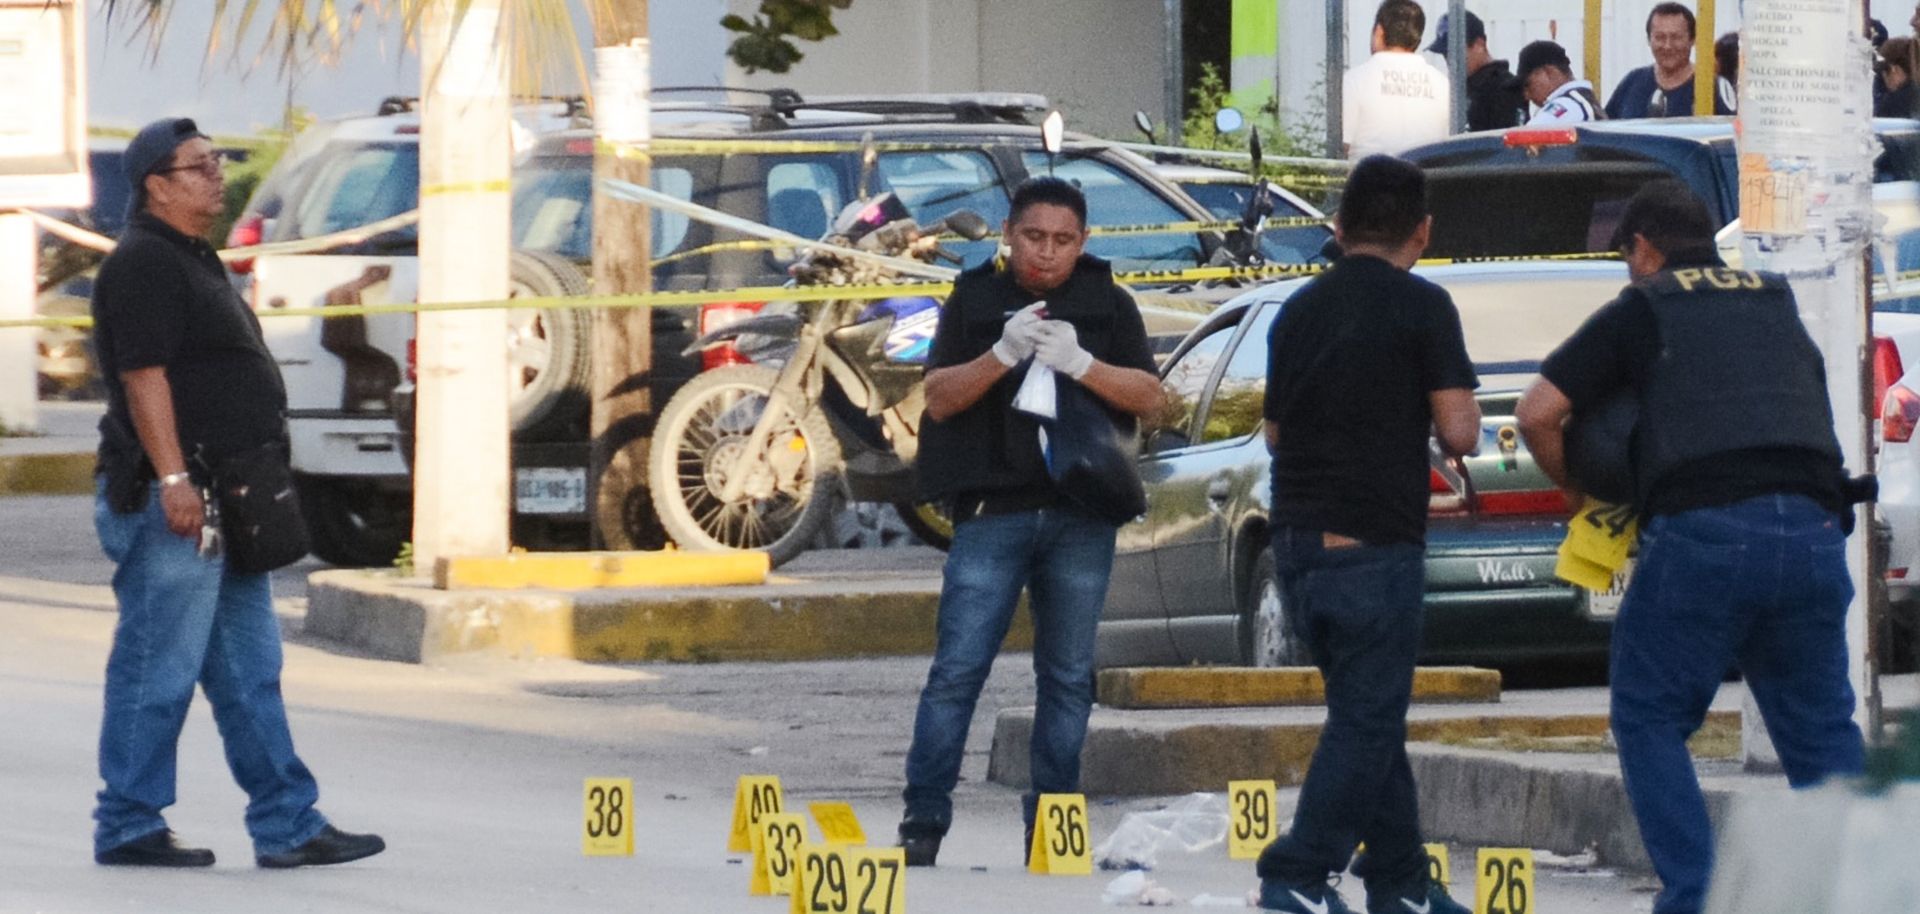 Investigators work a crime scene in Cancun, Mexico, where a gunfight erupted on Jan. 17.